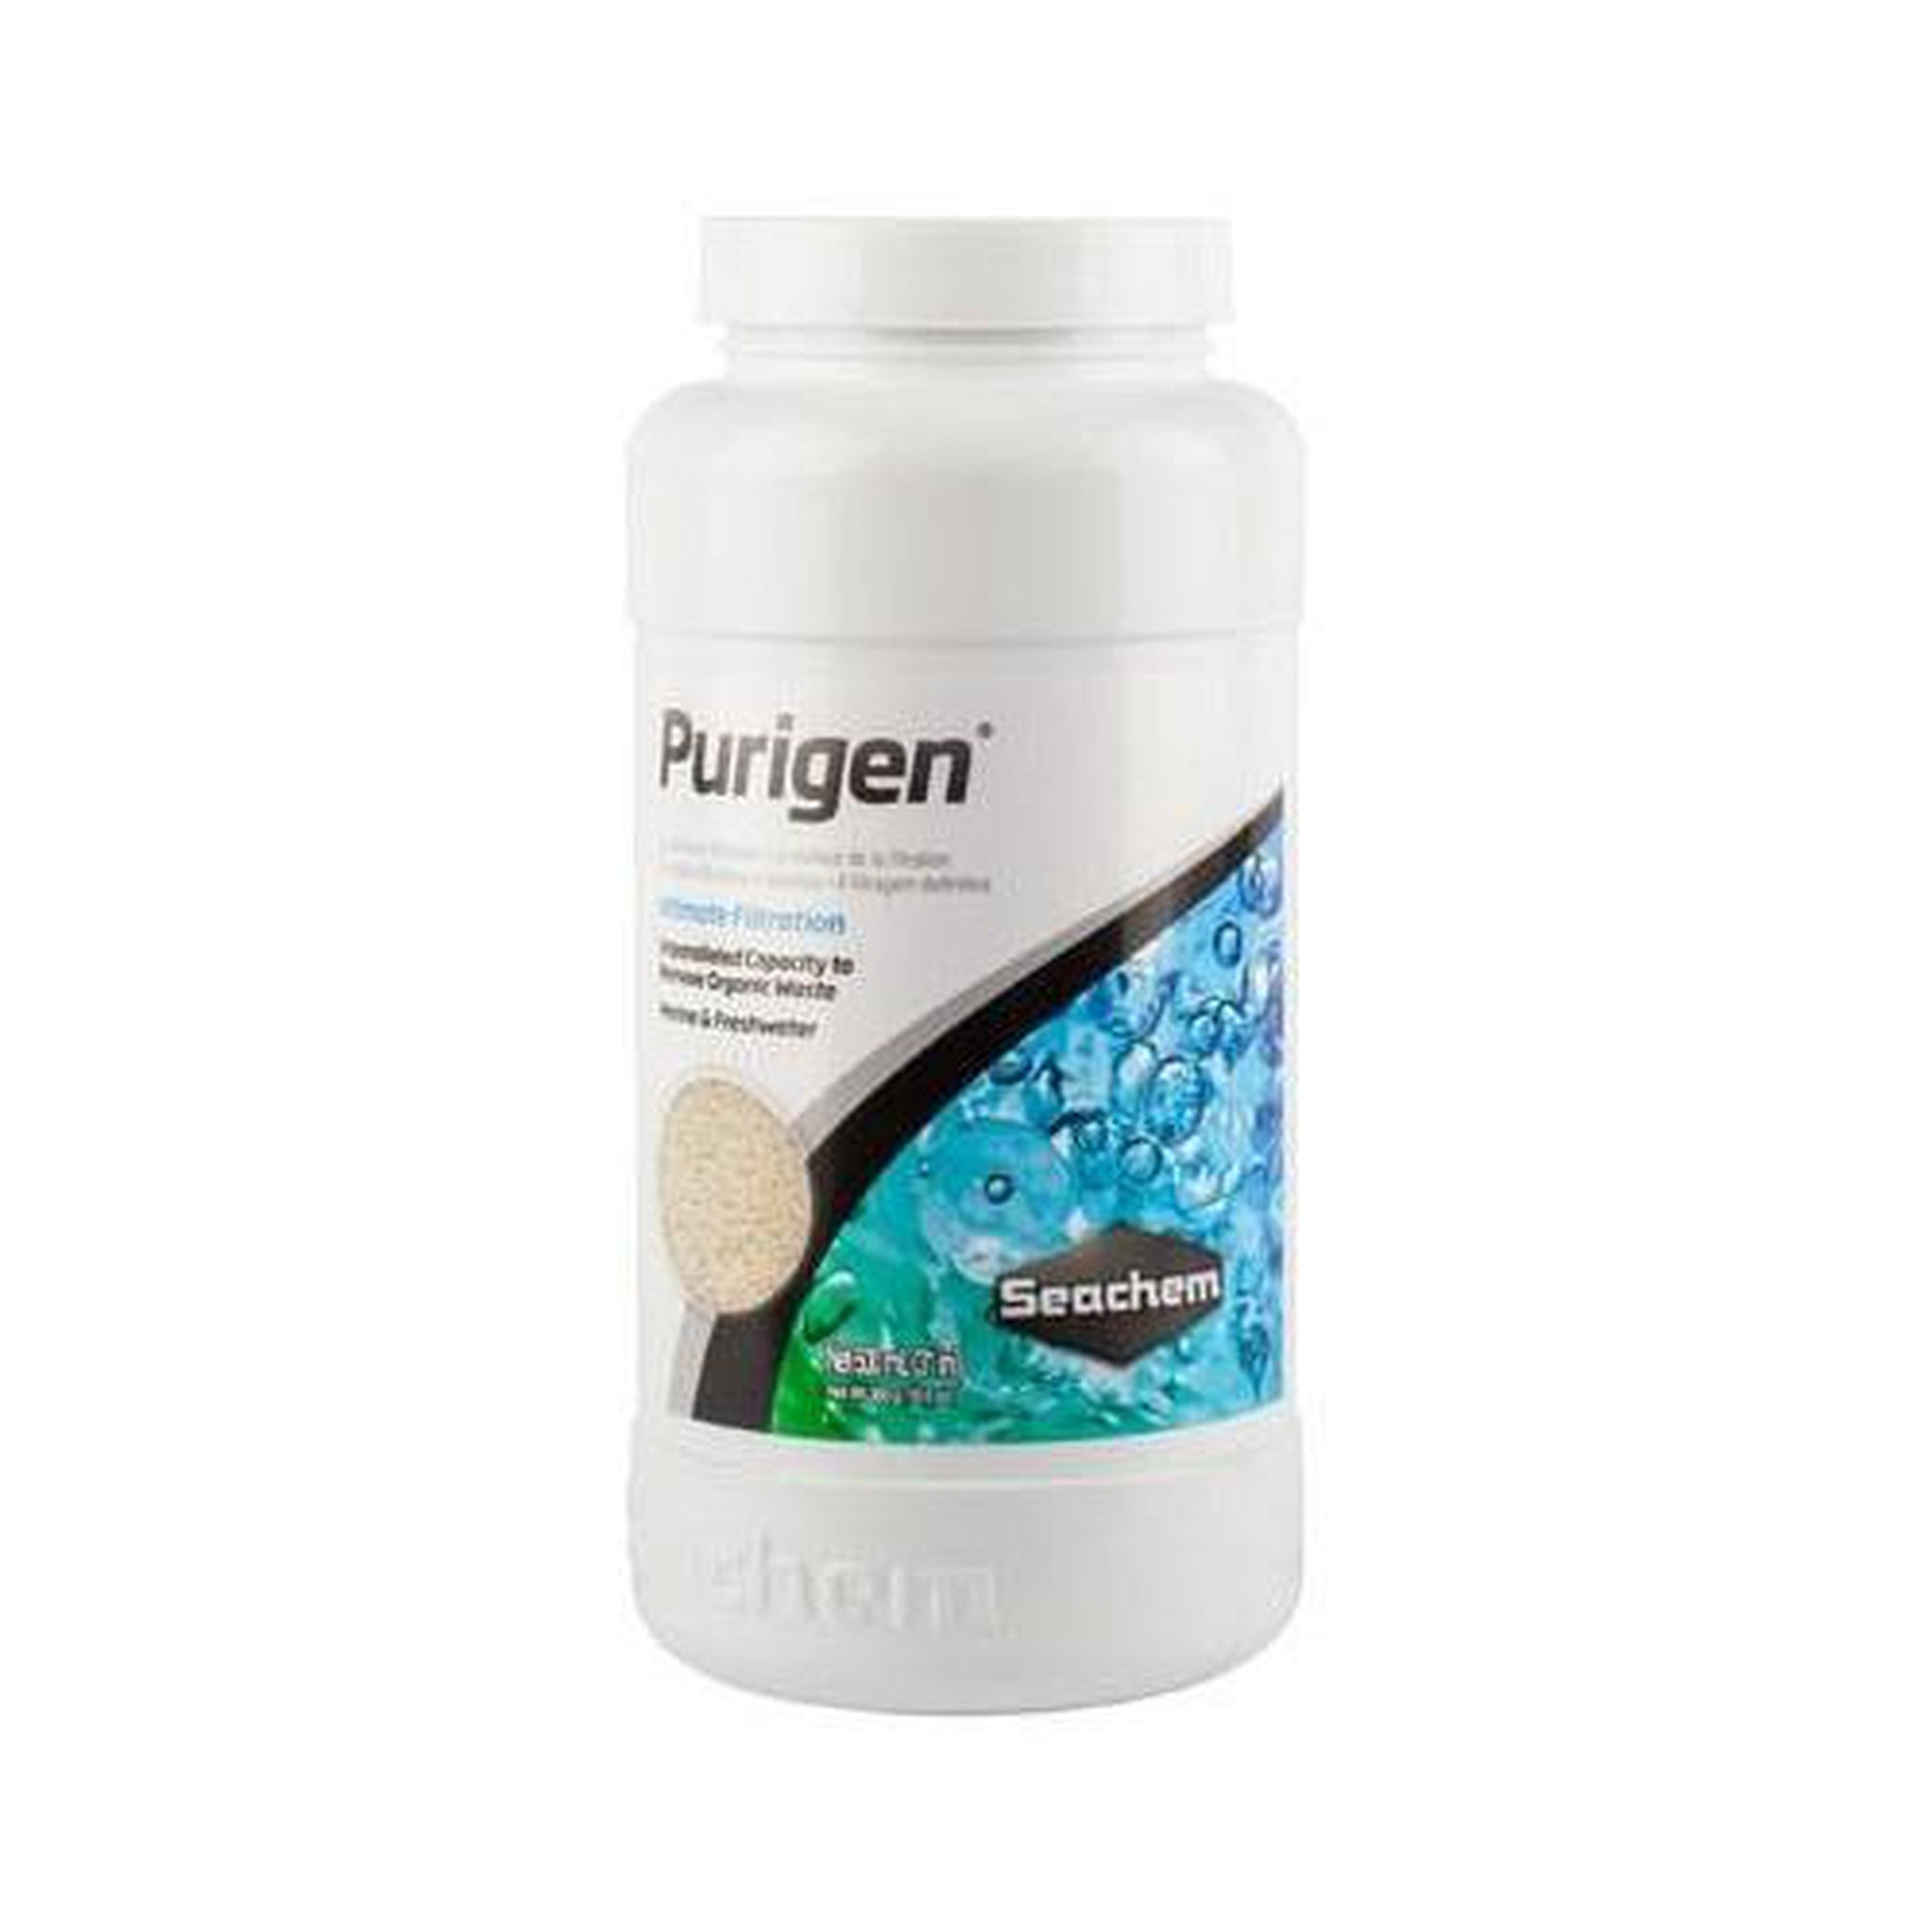 Seachem Purigen - The Fish Room TFR